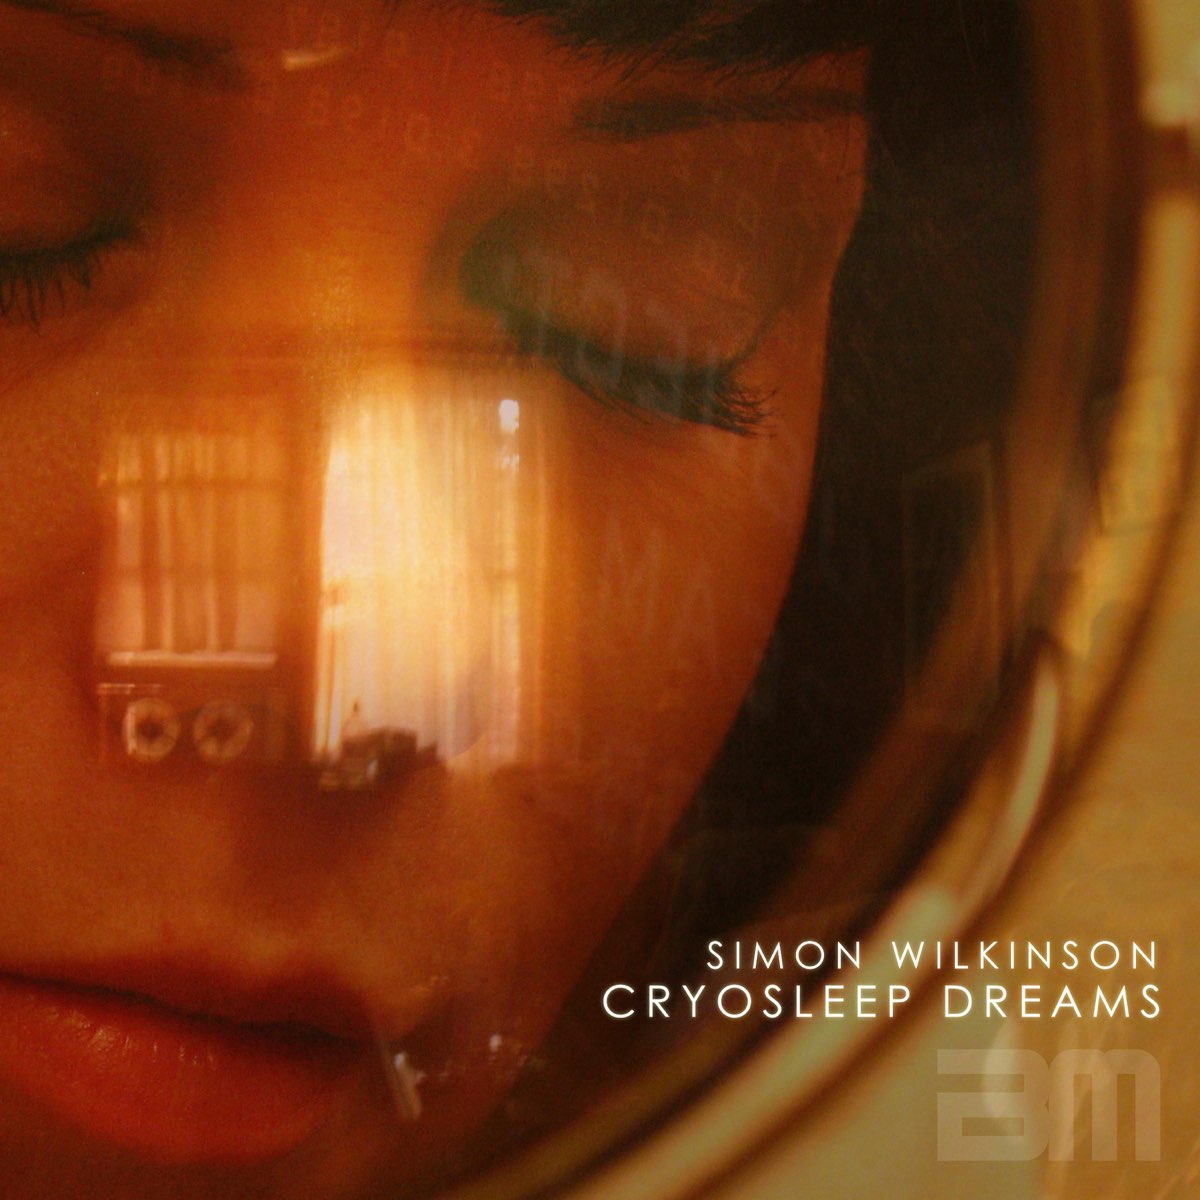 Cryosleep Dreams by Simon Wilkinson on Apple Music